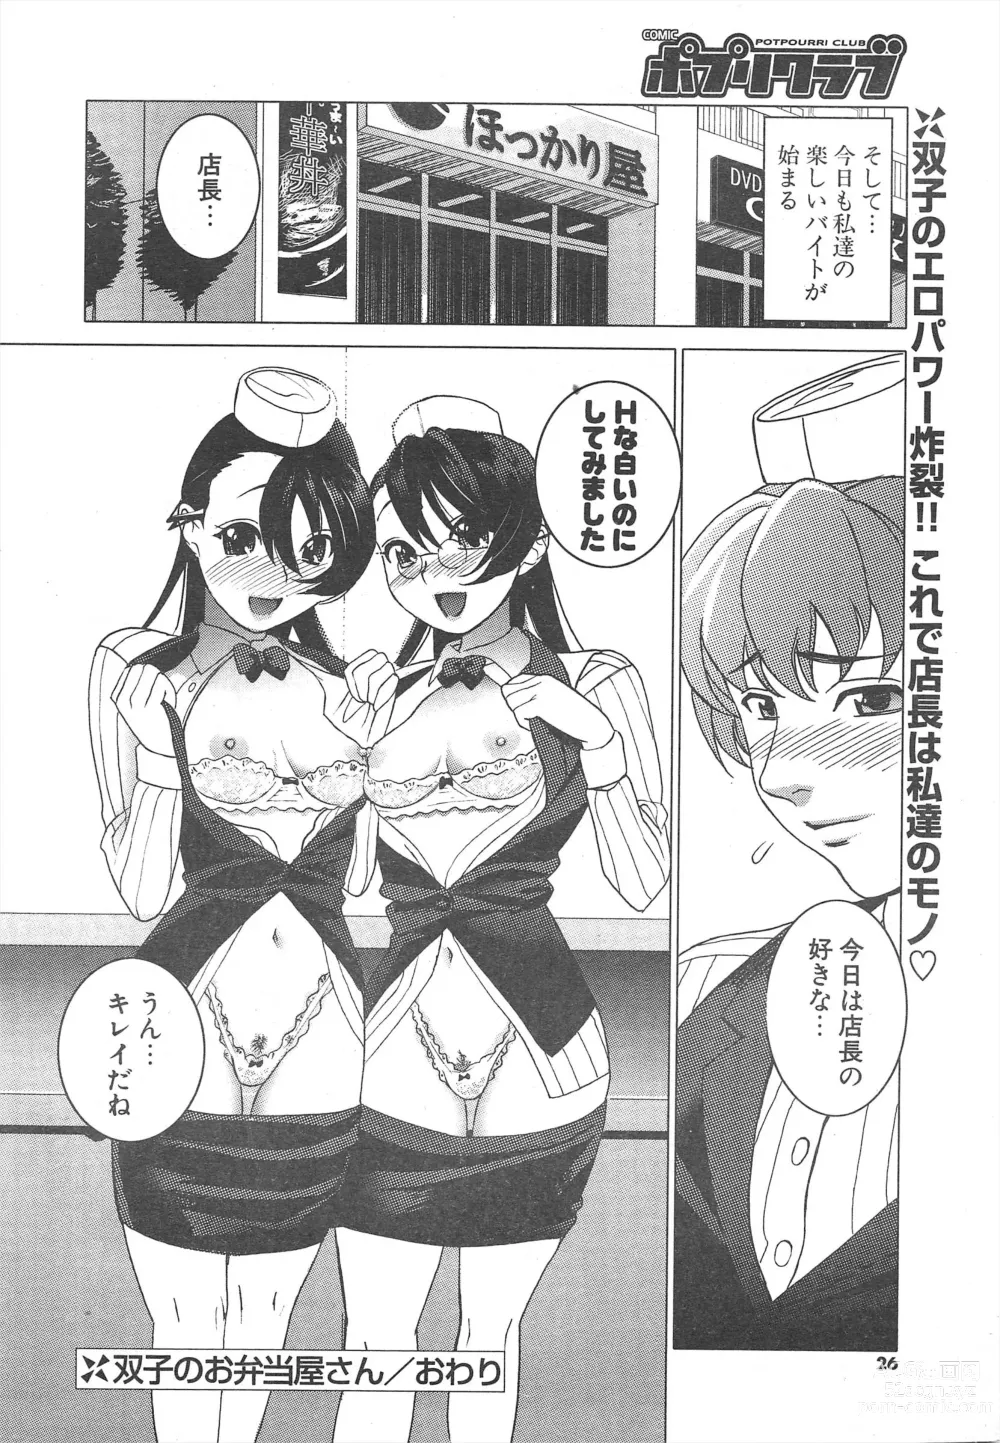 Page 26 of manga Comic Potpourri Club 2005-01